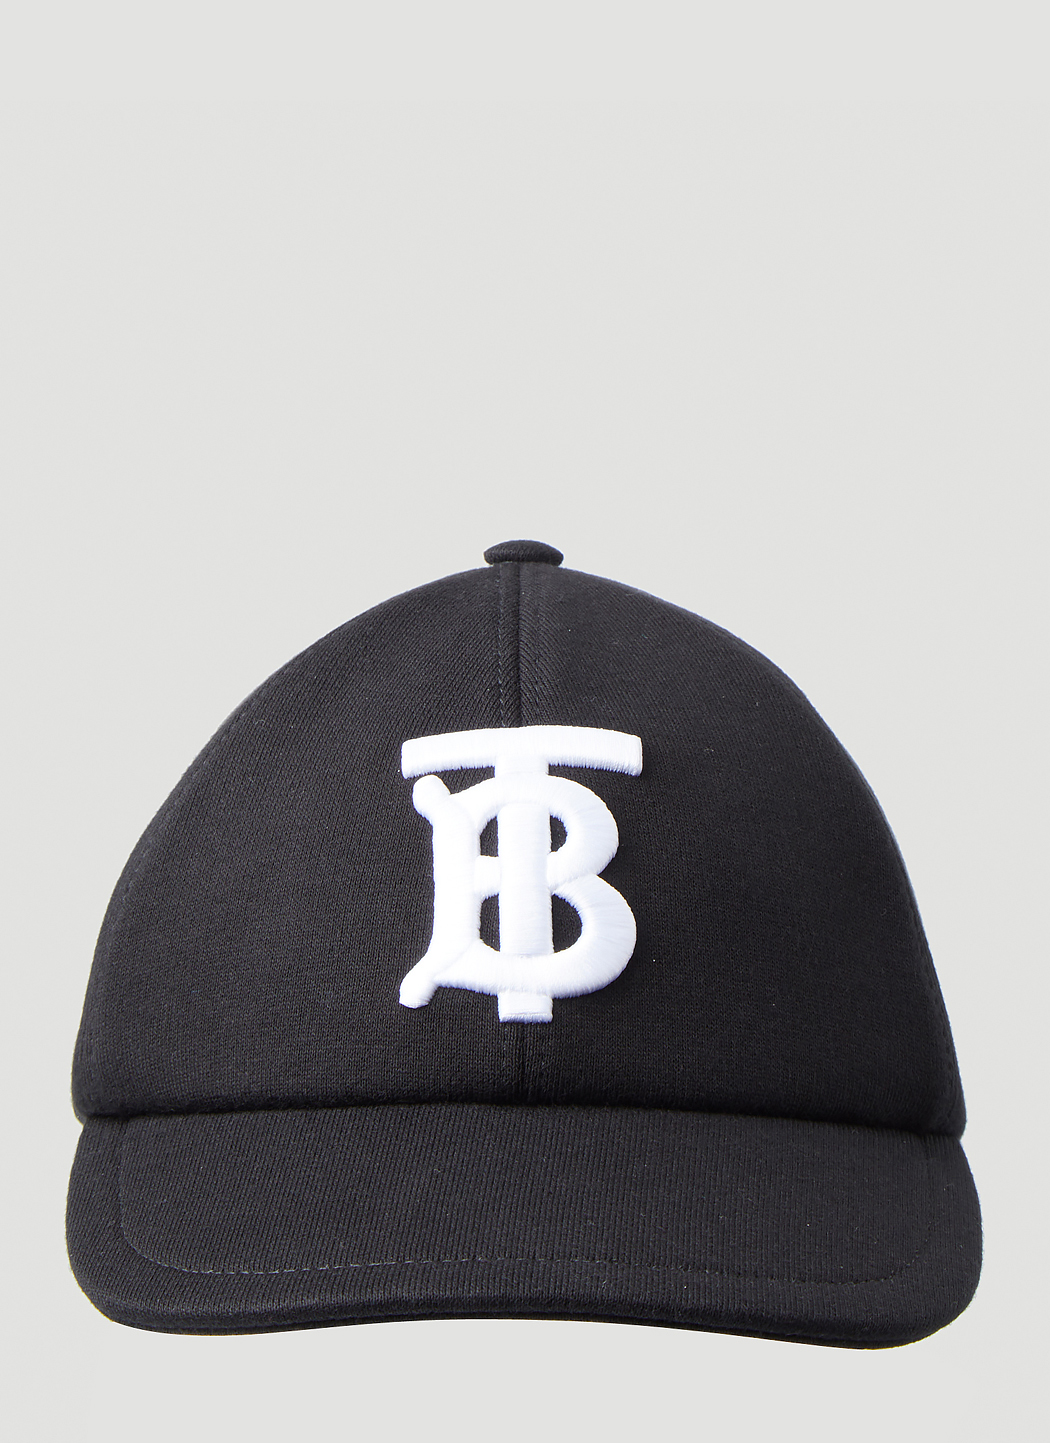 TB Monogram Baseball Cap